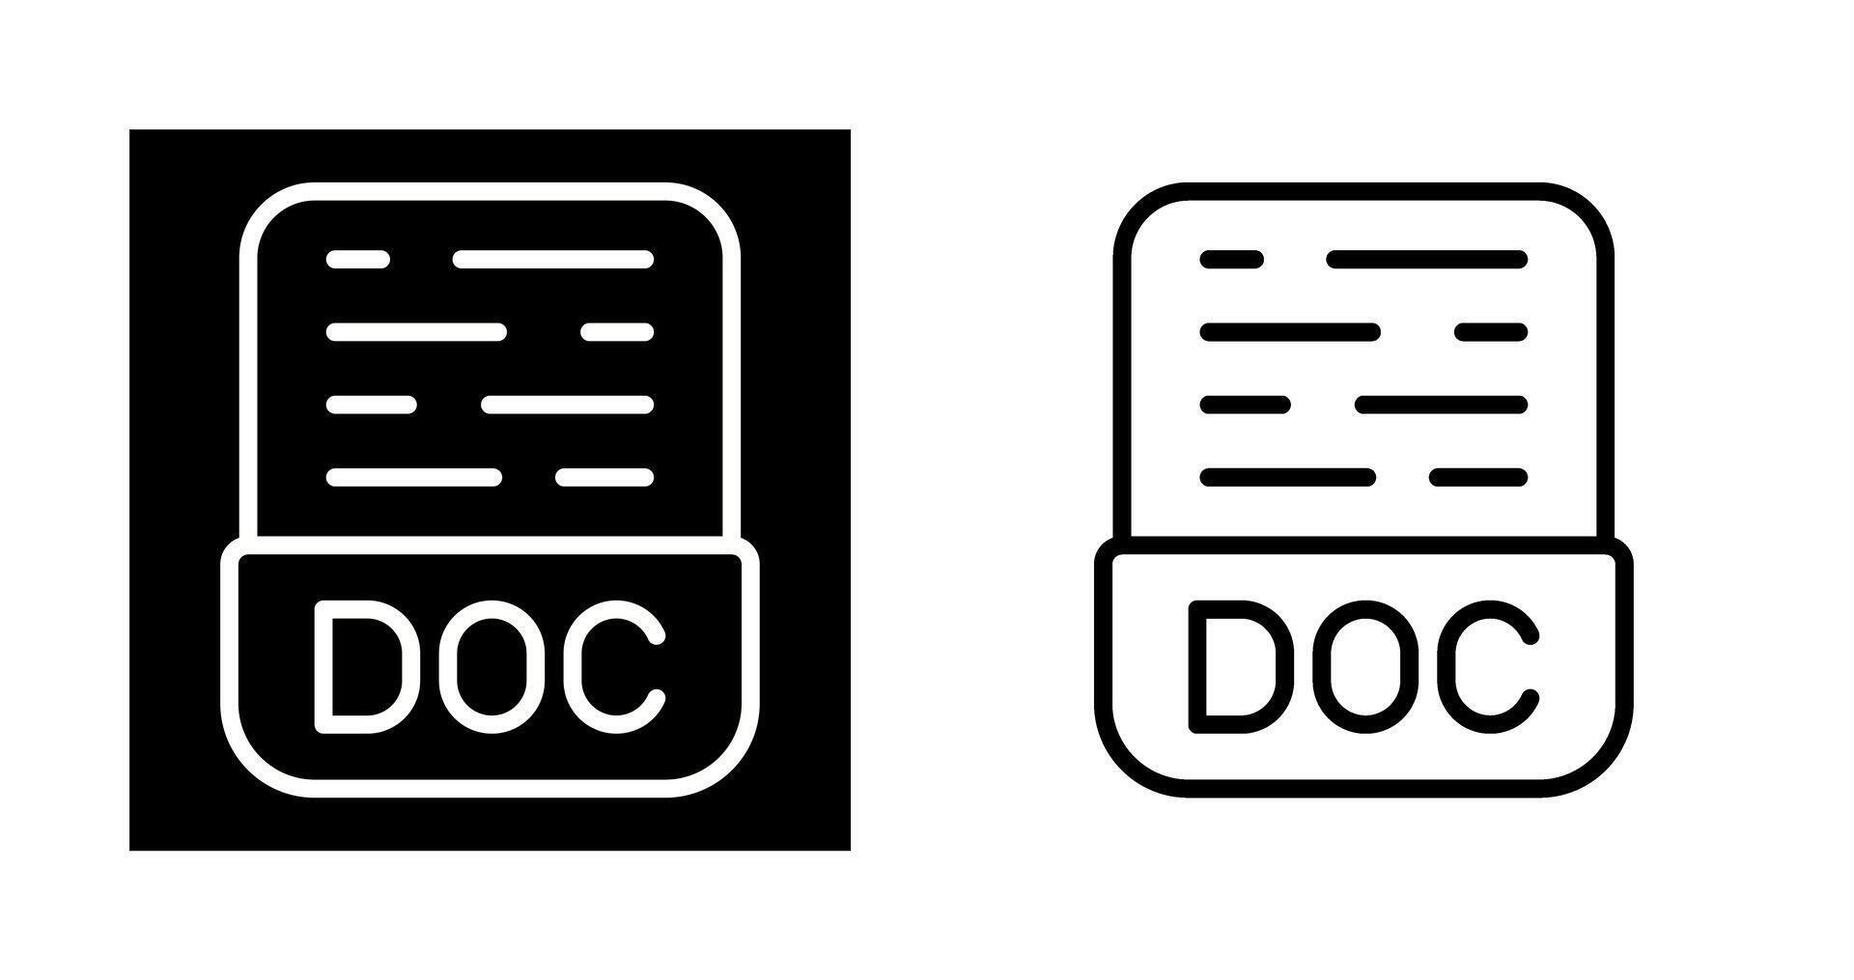 DOC Vector Icon